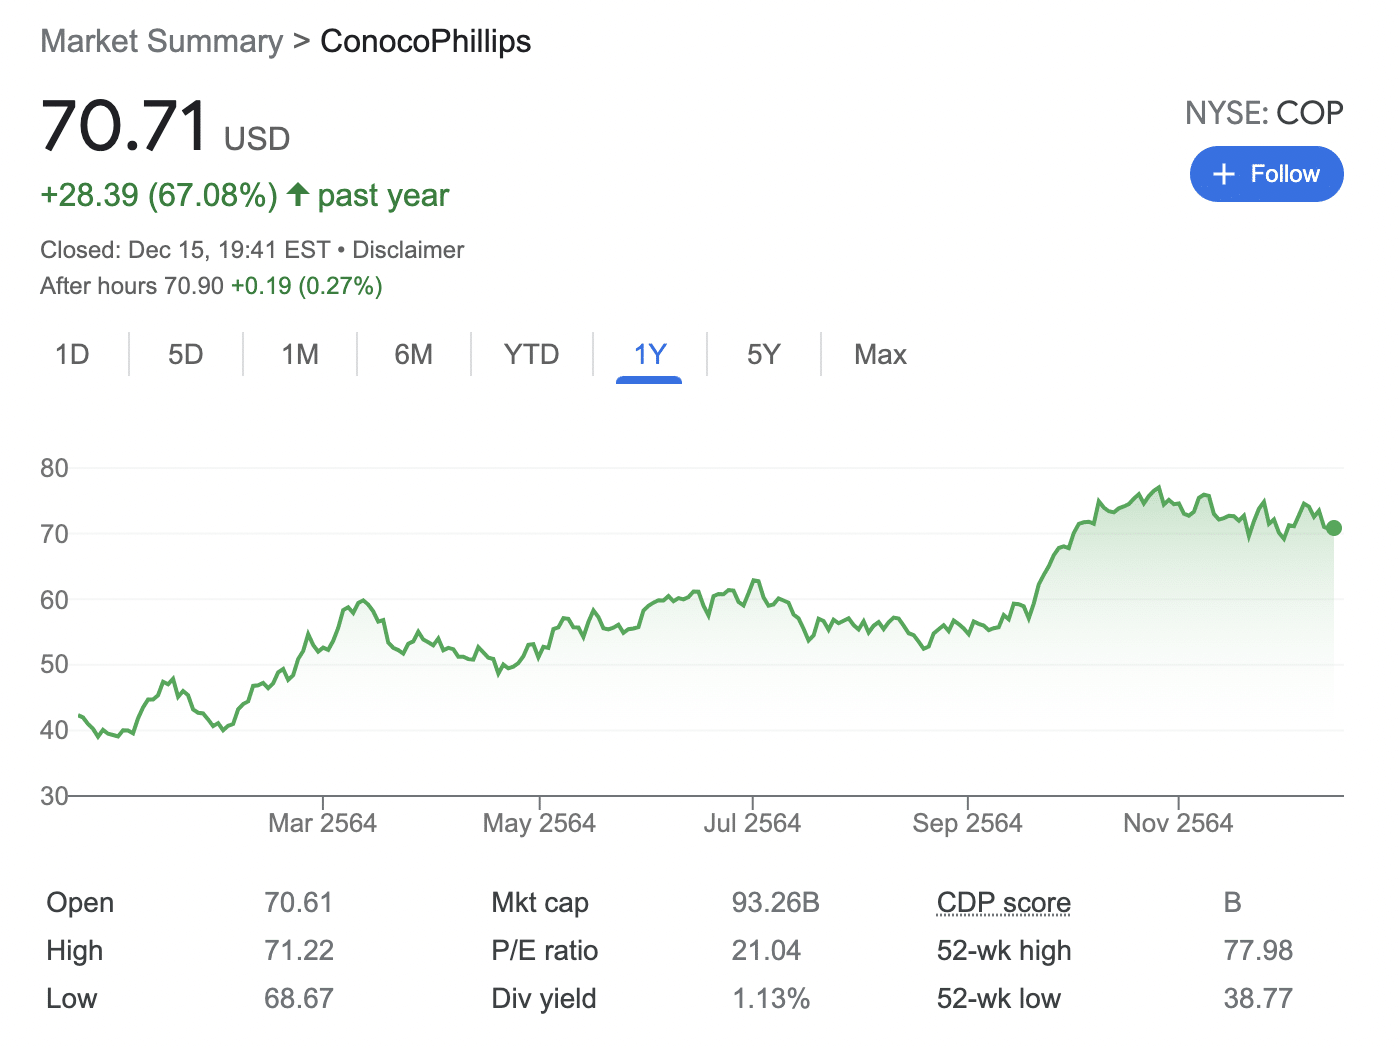 ConocoPhillips stocks